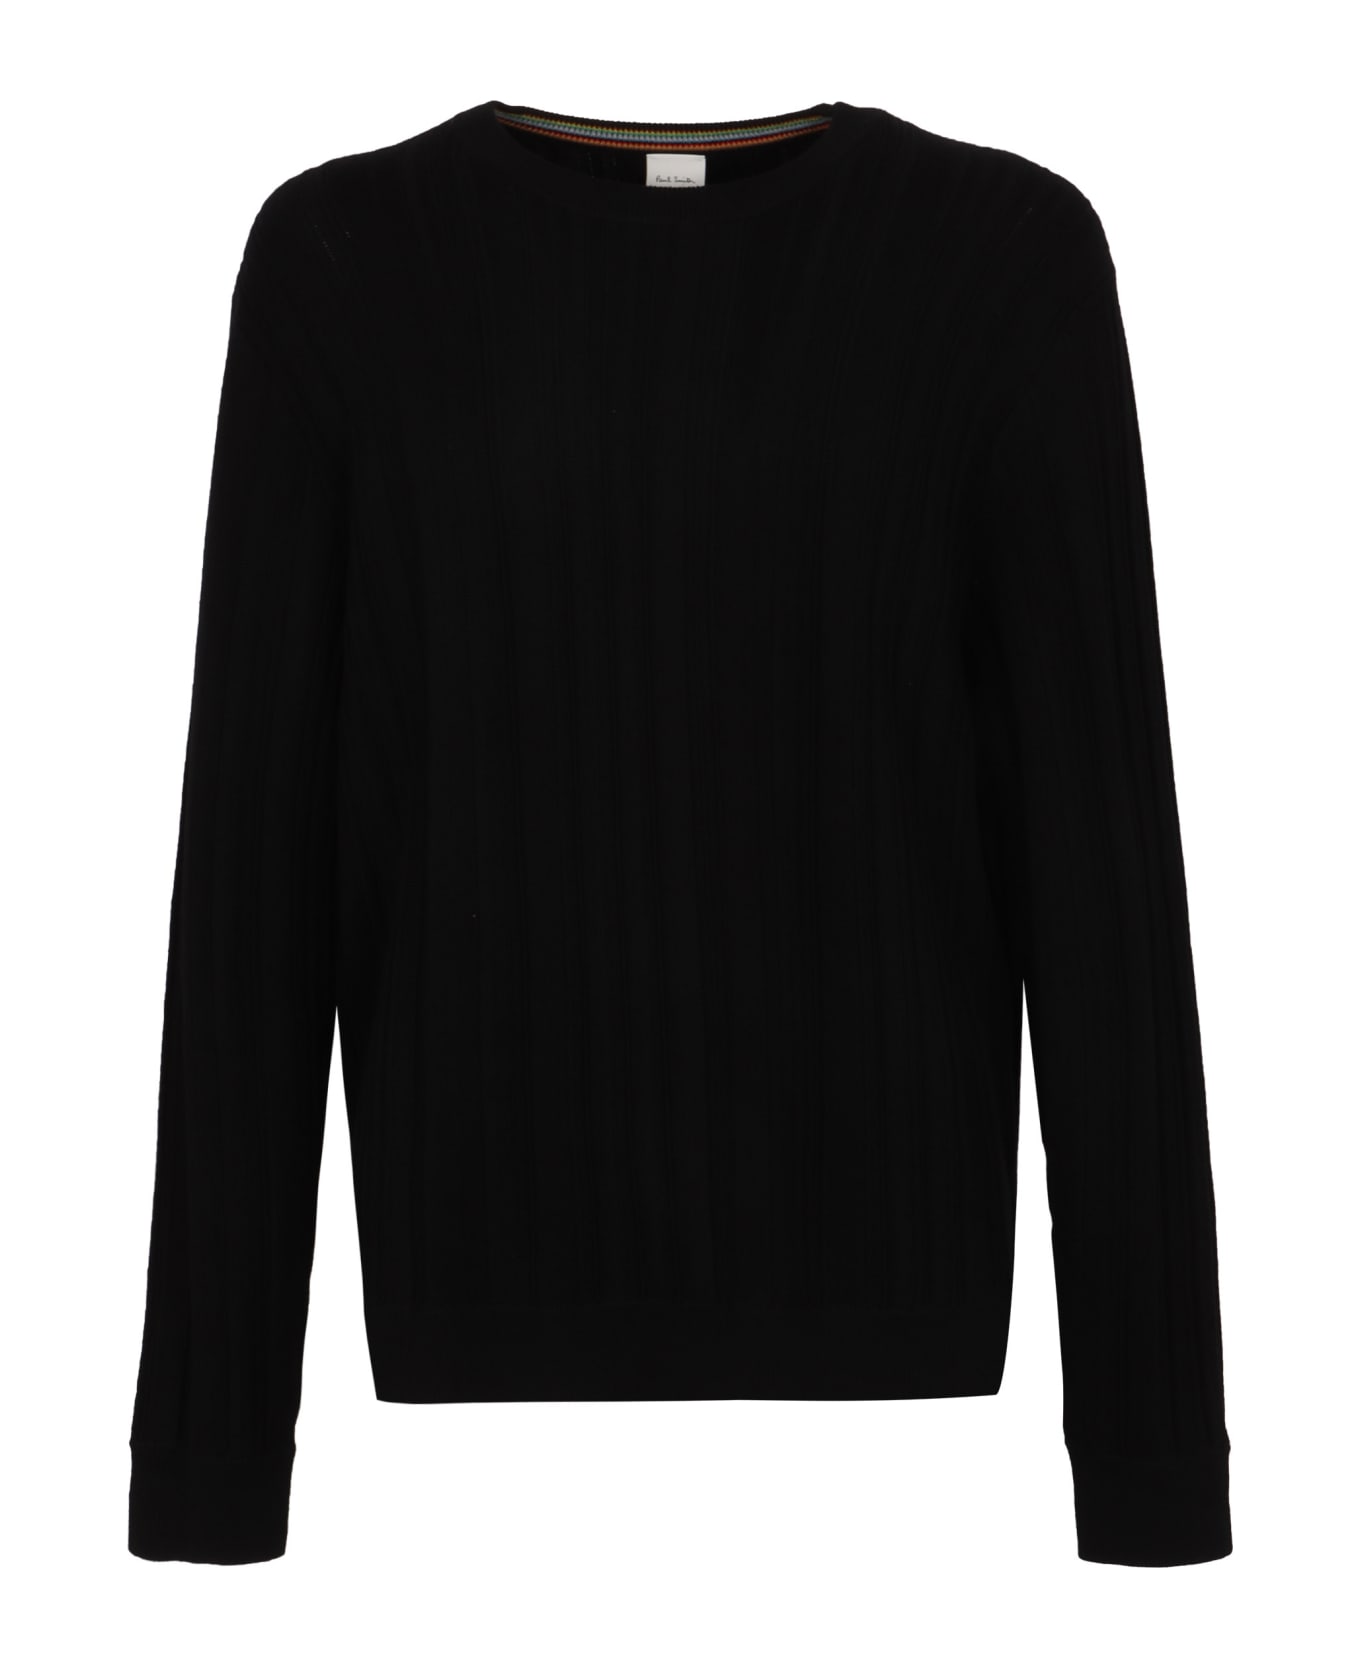 Paul Smith Merino Wool Sweater - black ニットウェア